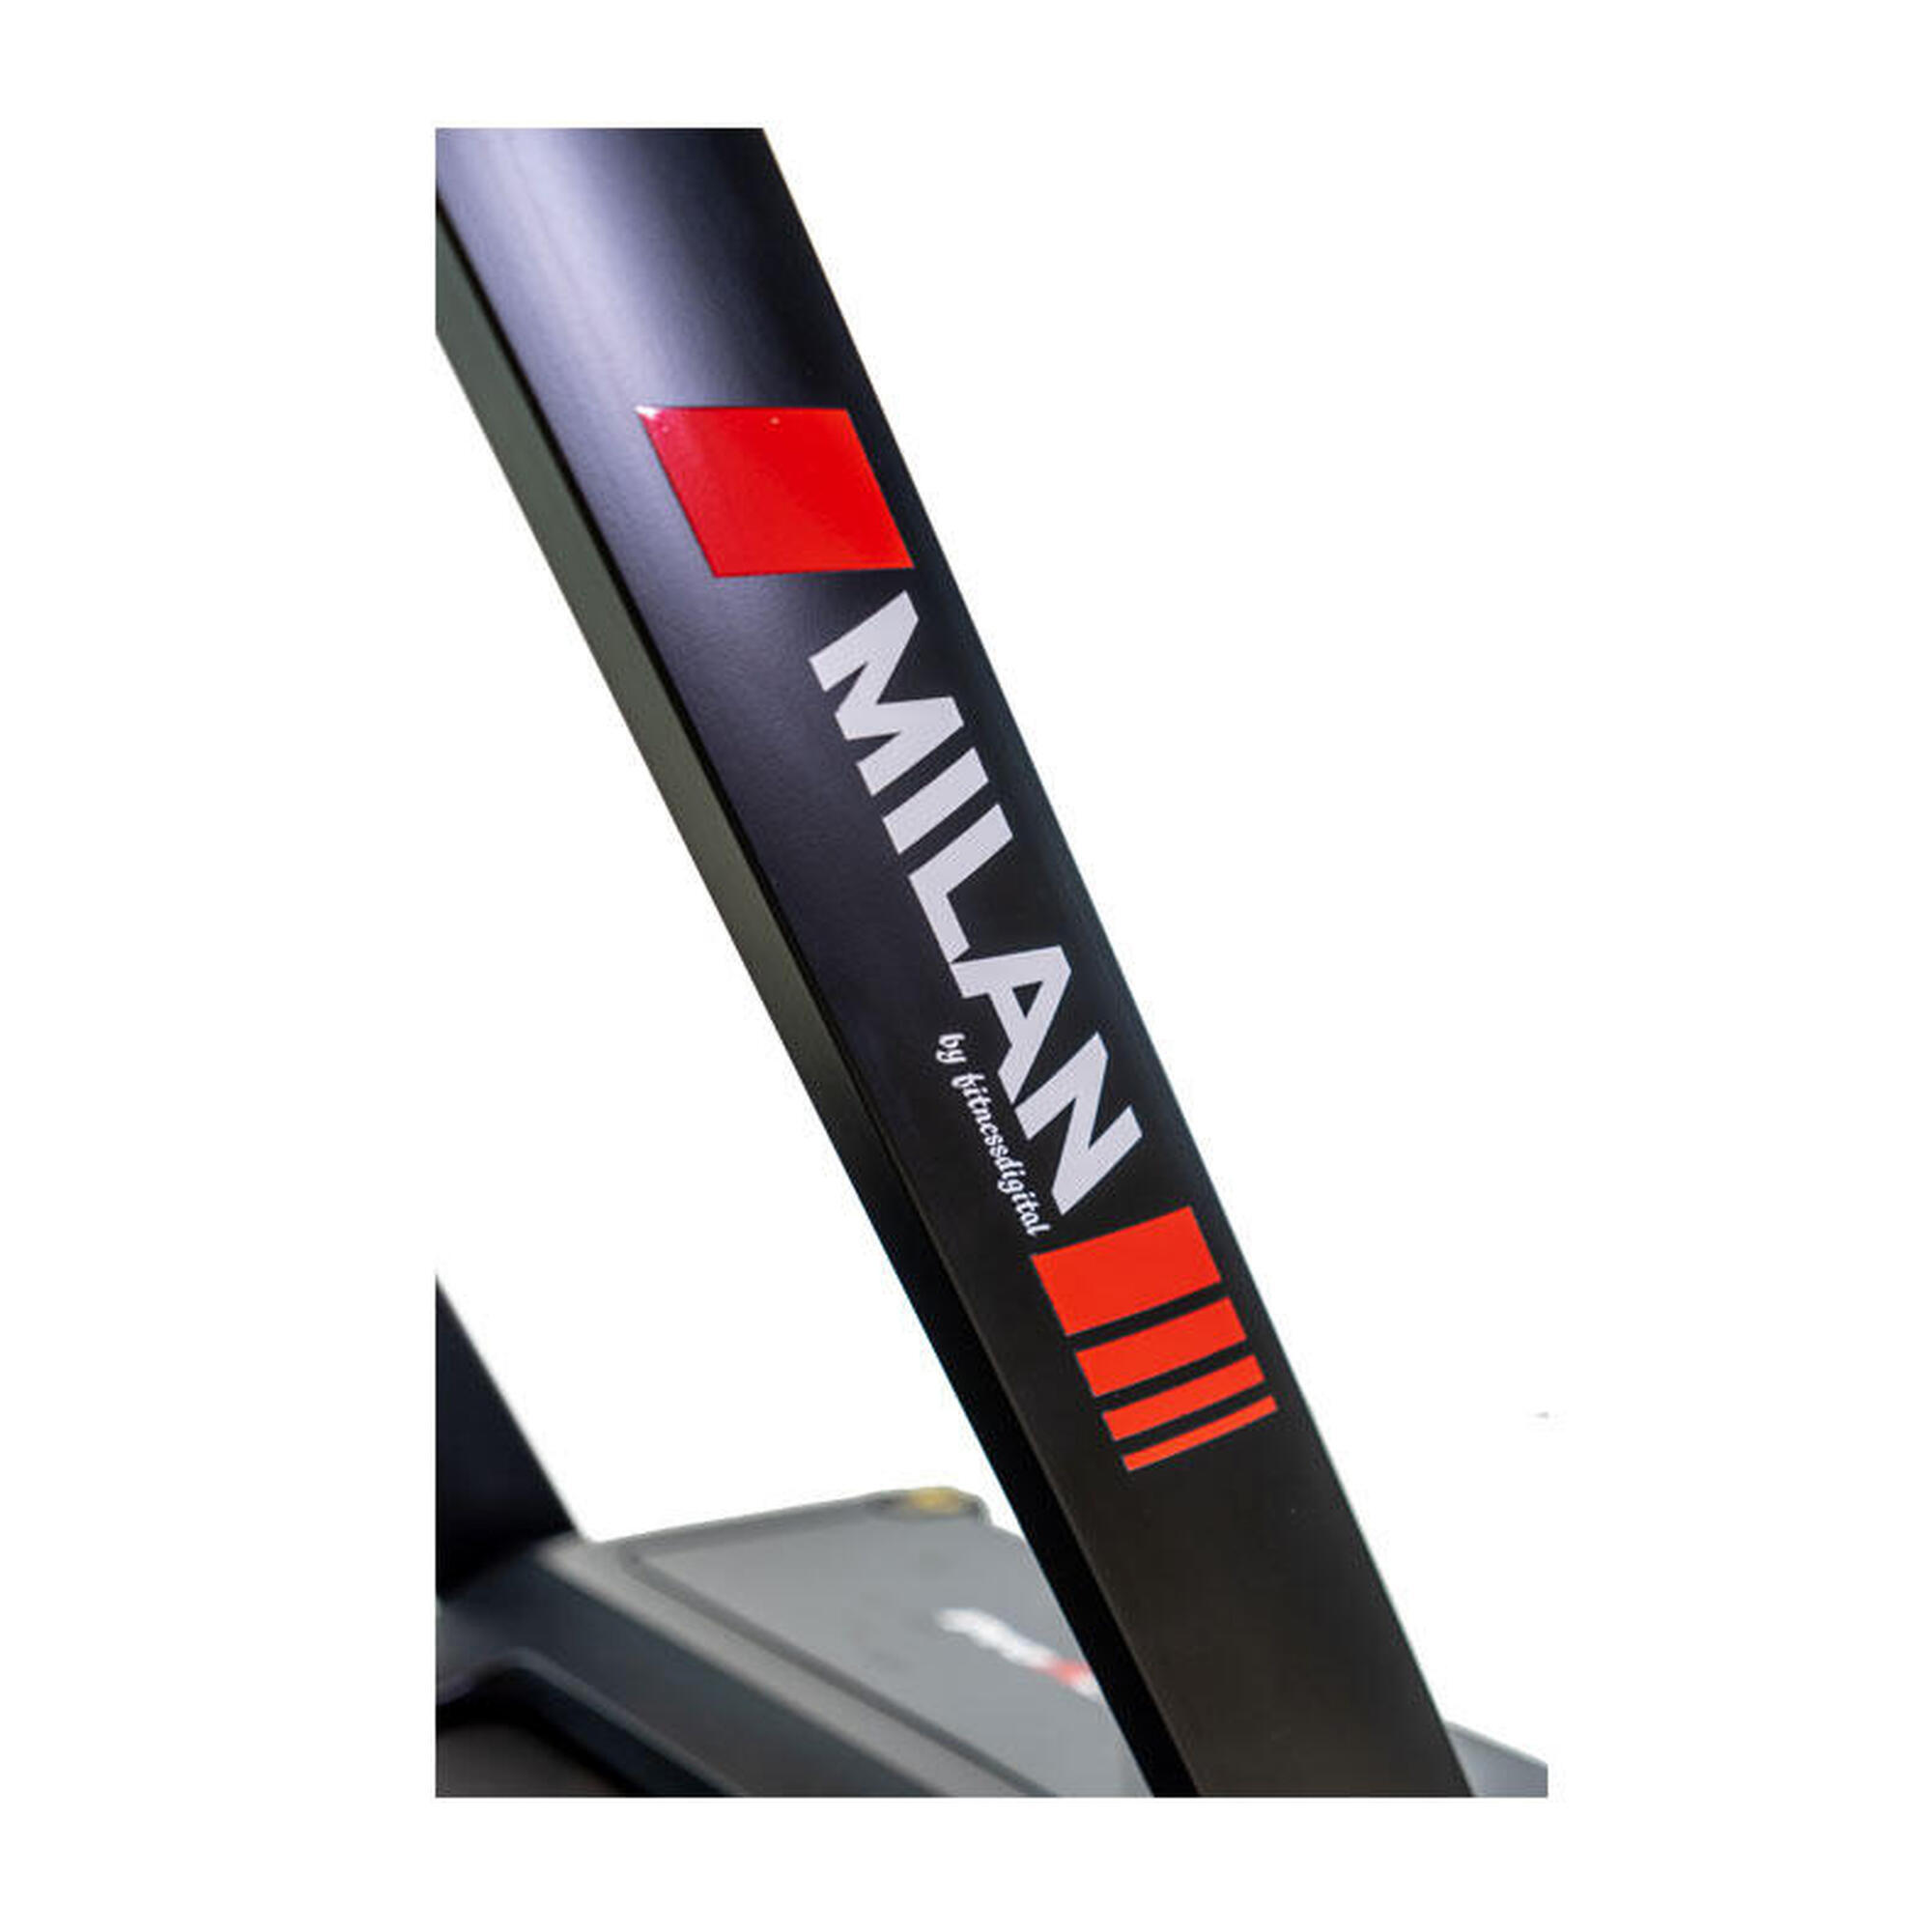 Tapis roulant - Milano - Kinomap e Zwift - 140x50cm - LCD